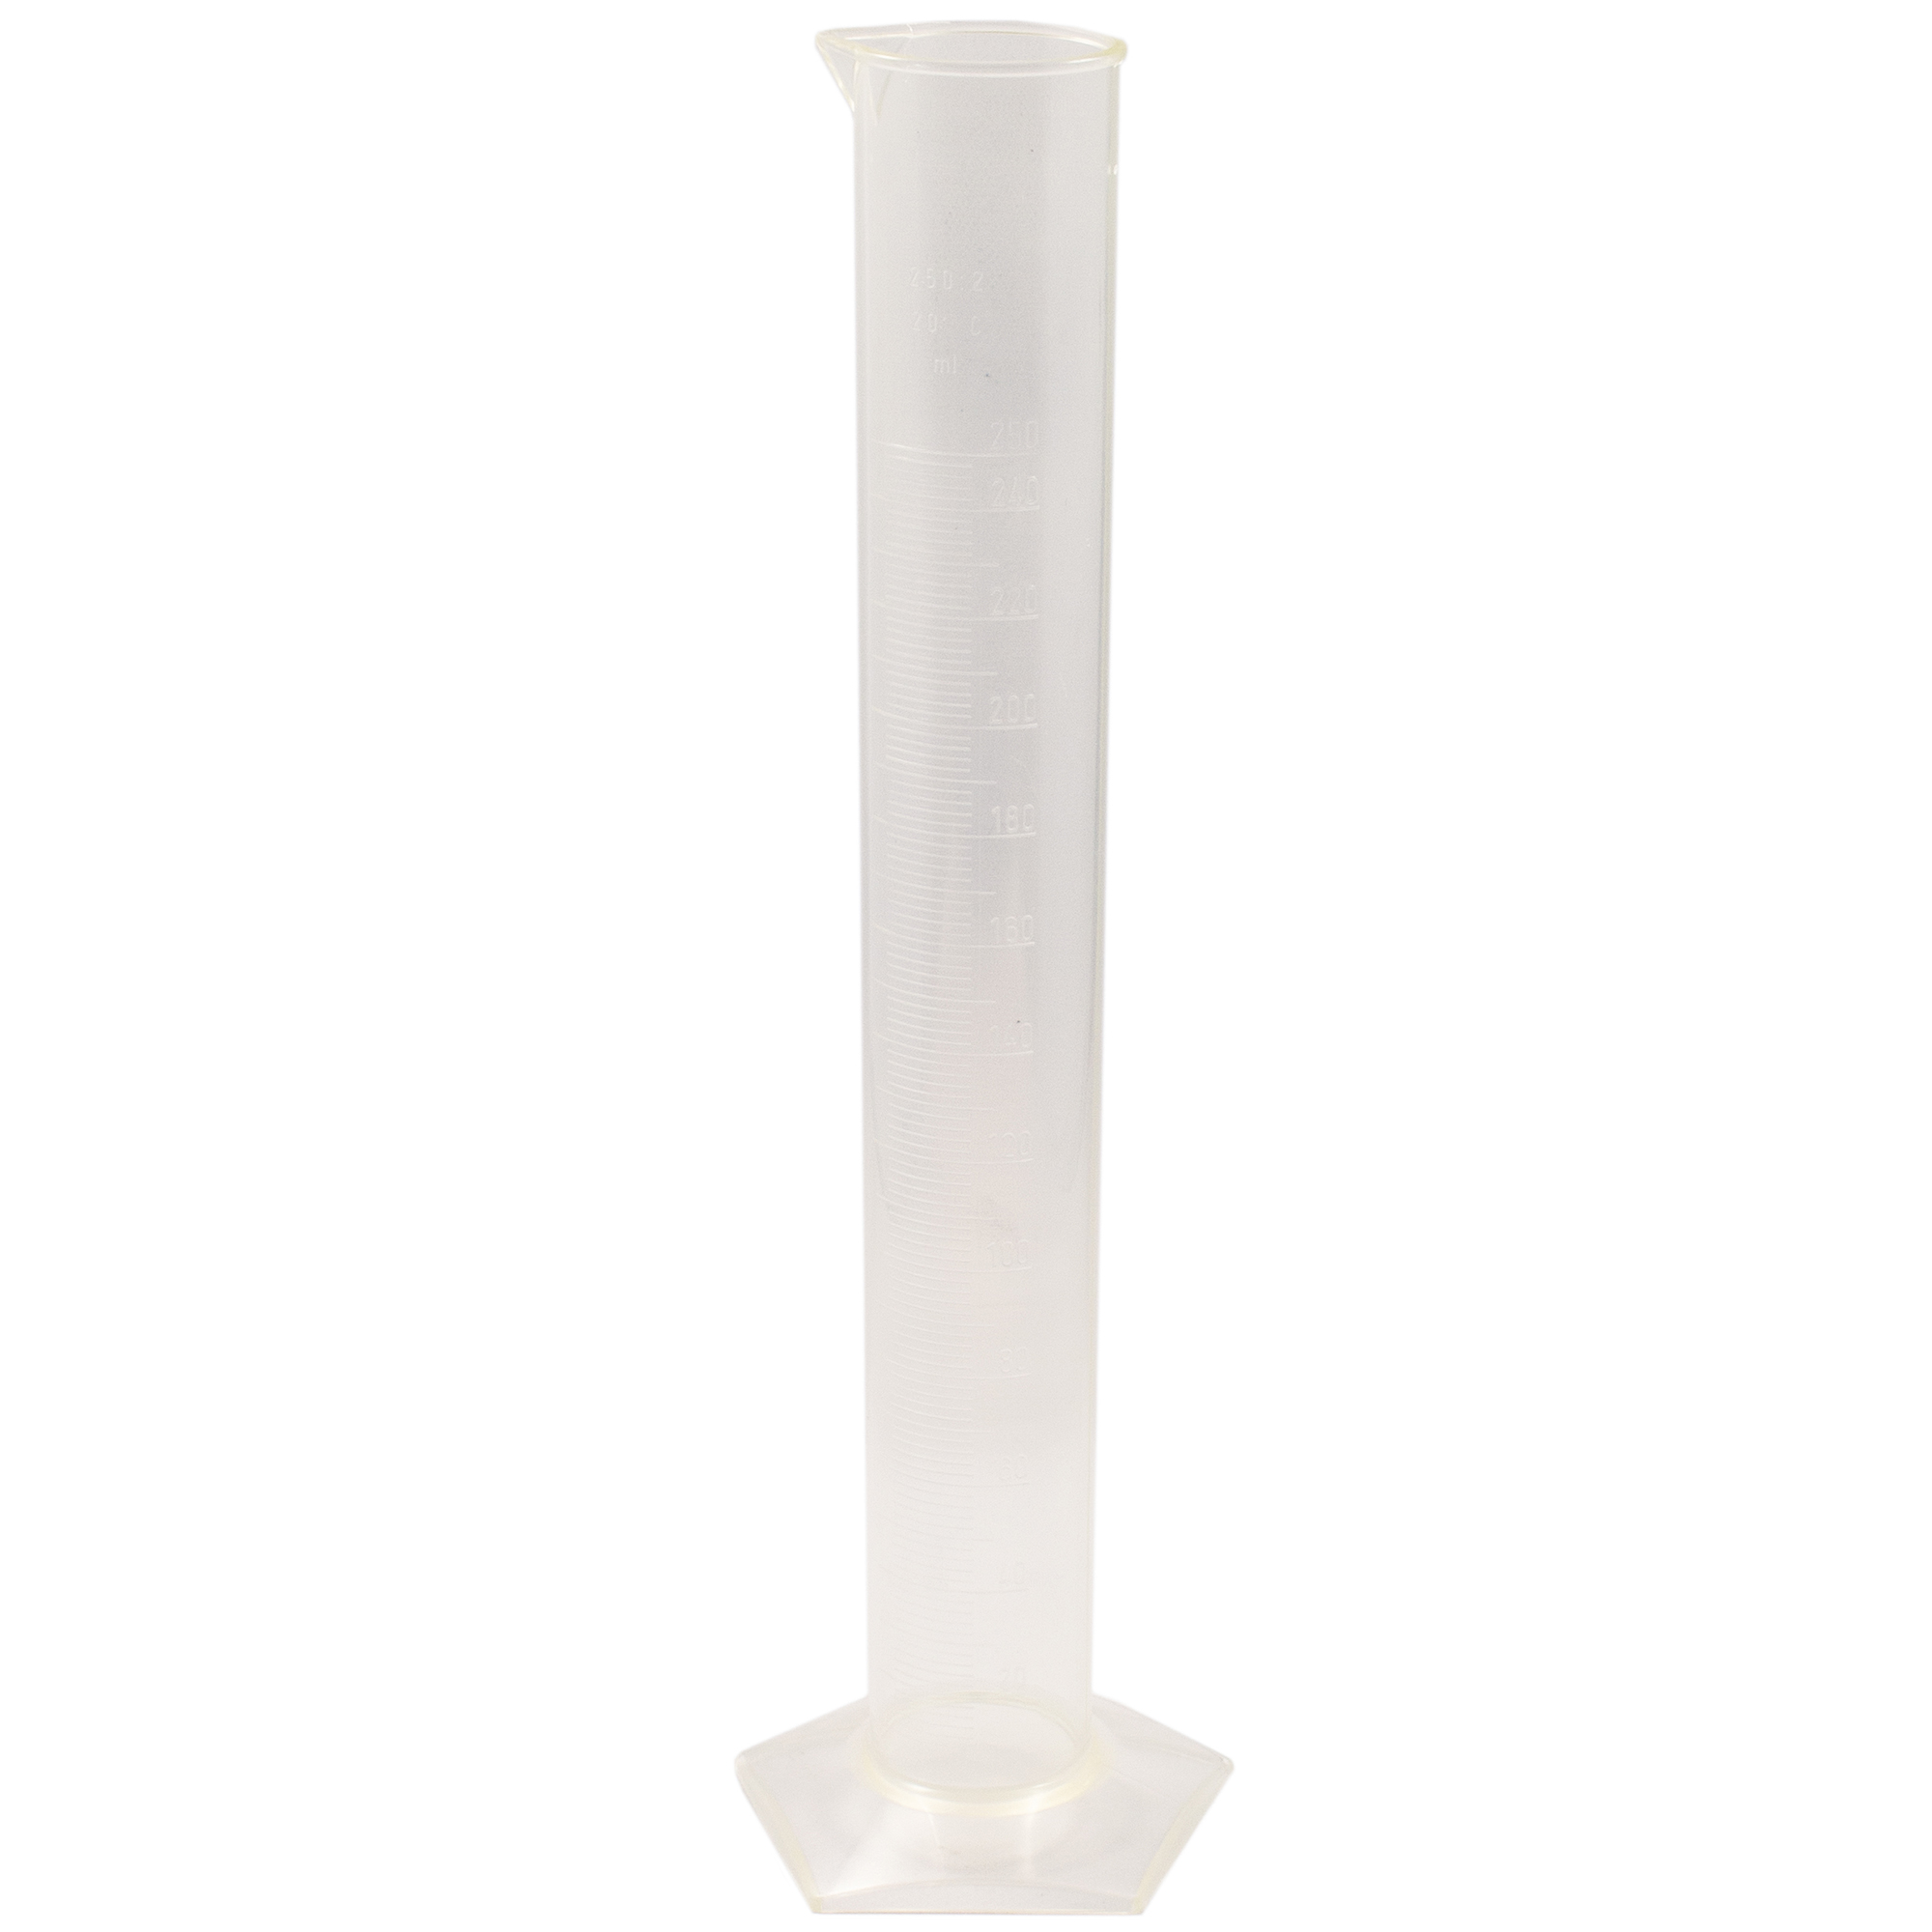 Measuring cylinder plastic (tpx) - 25ml